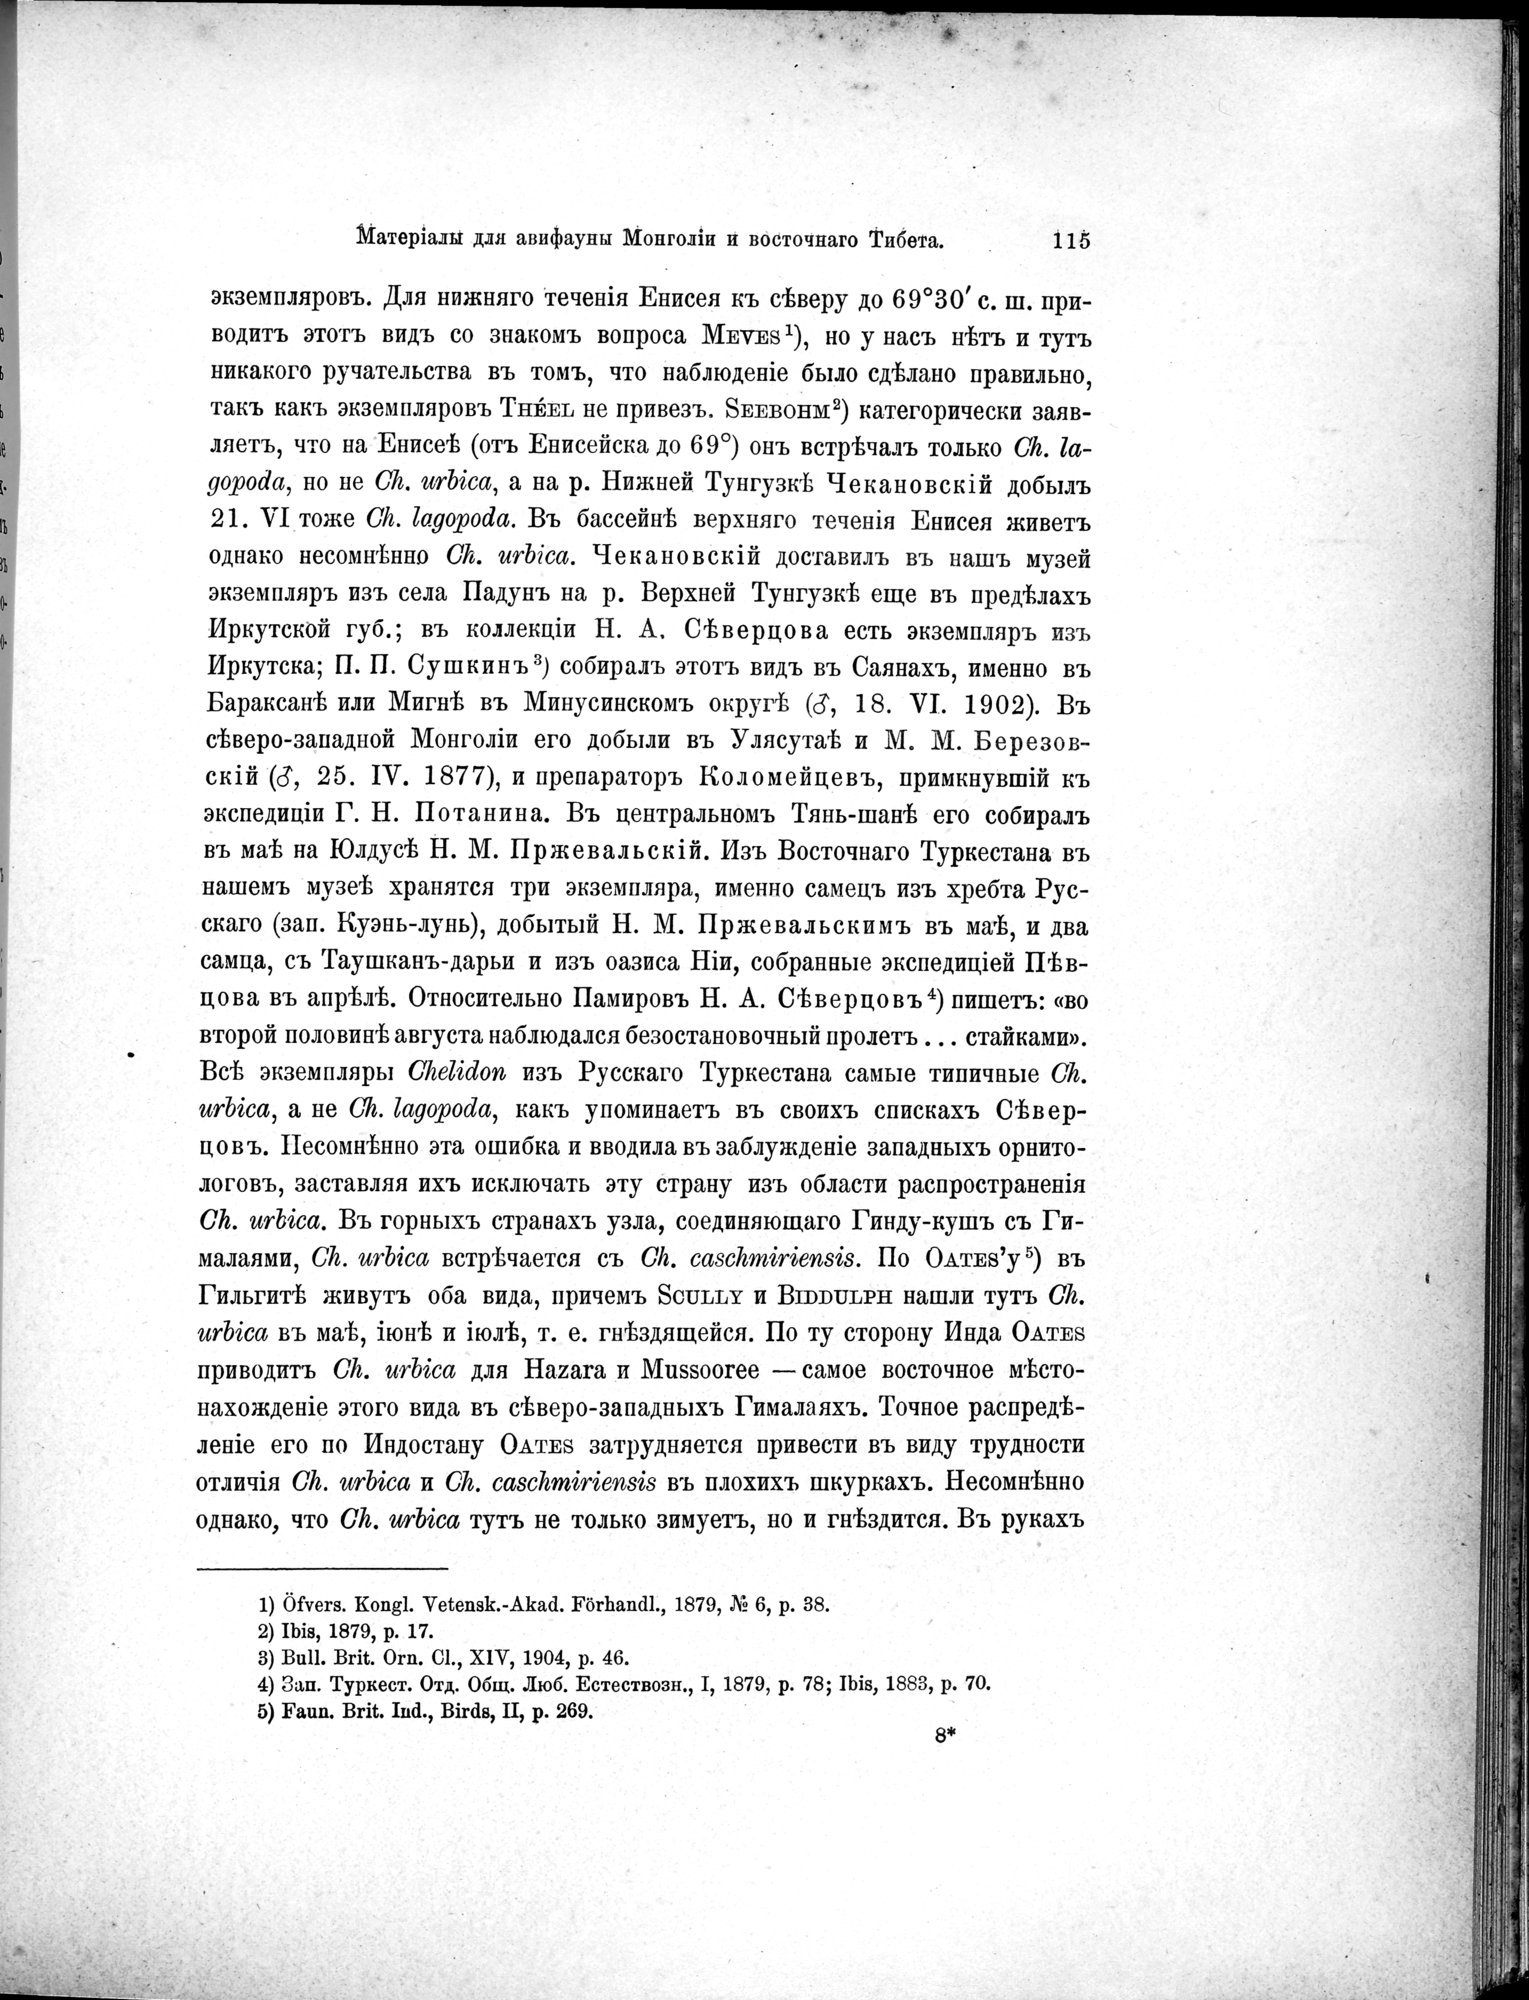 Mongoliia i Kam : vol.5 / Page 187 (Grayscale High Resolution Image)